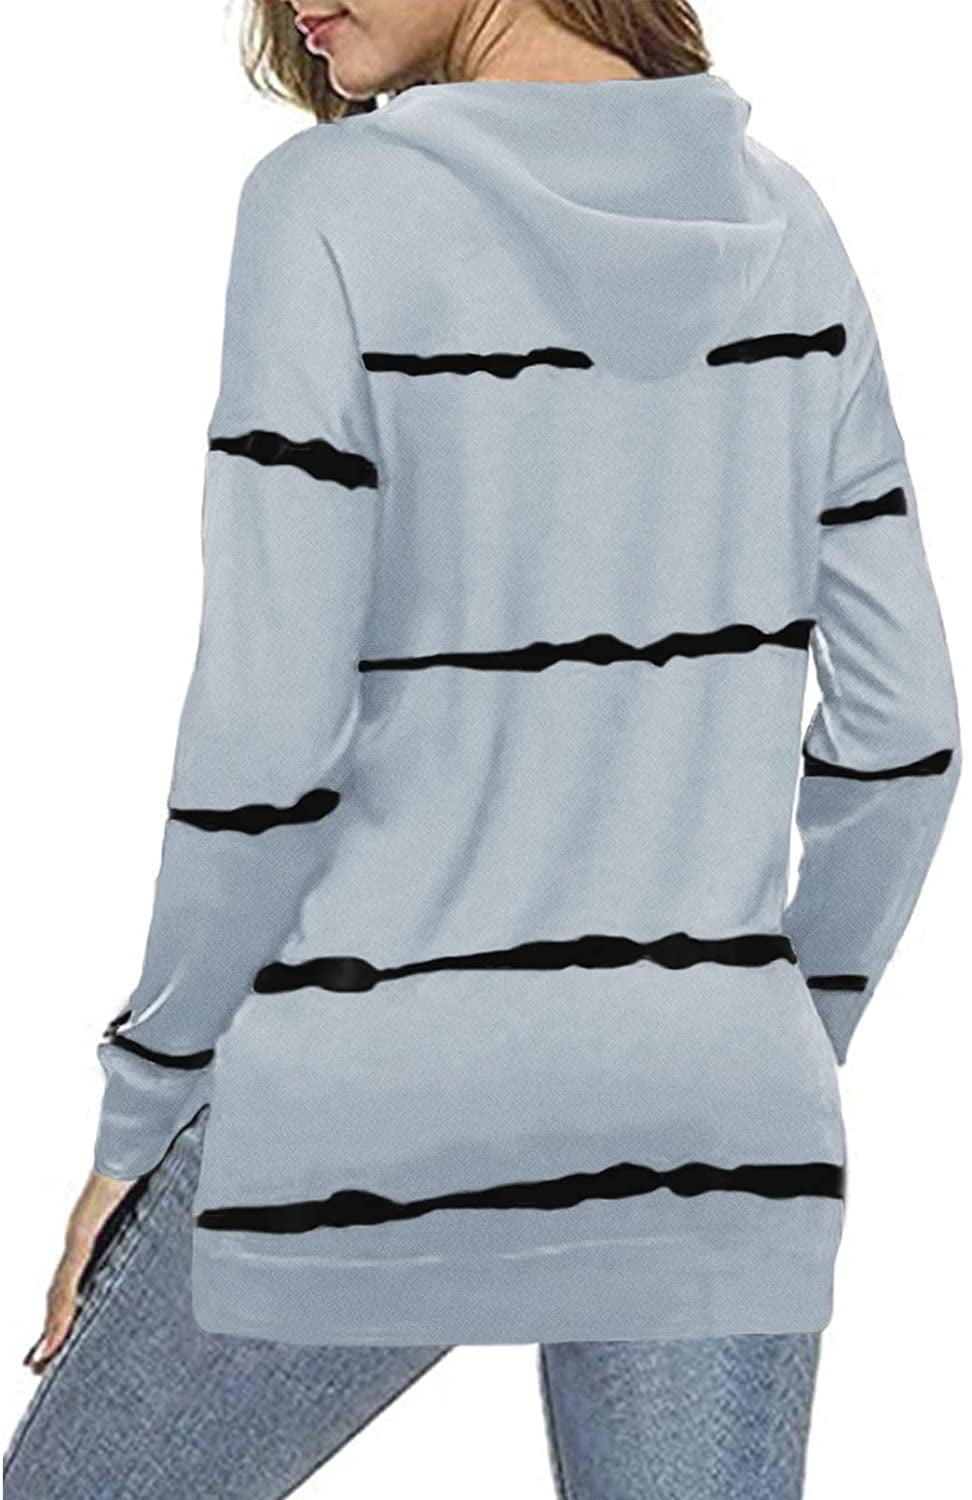 Biucly Womens Casual Hoodie Striped Printed Sweatshirts Long Sleeve Drawstring Pullover Tops Shirts